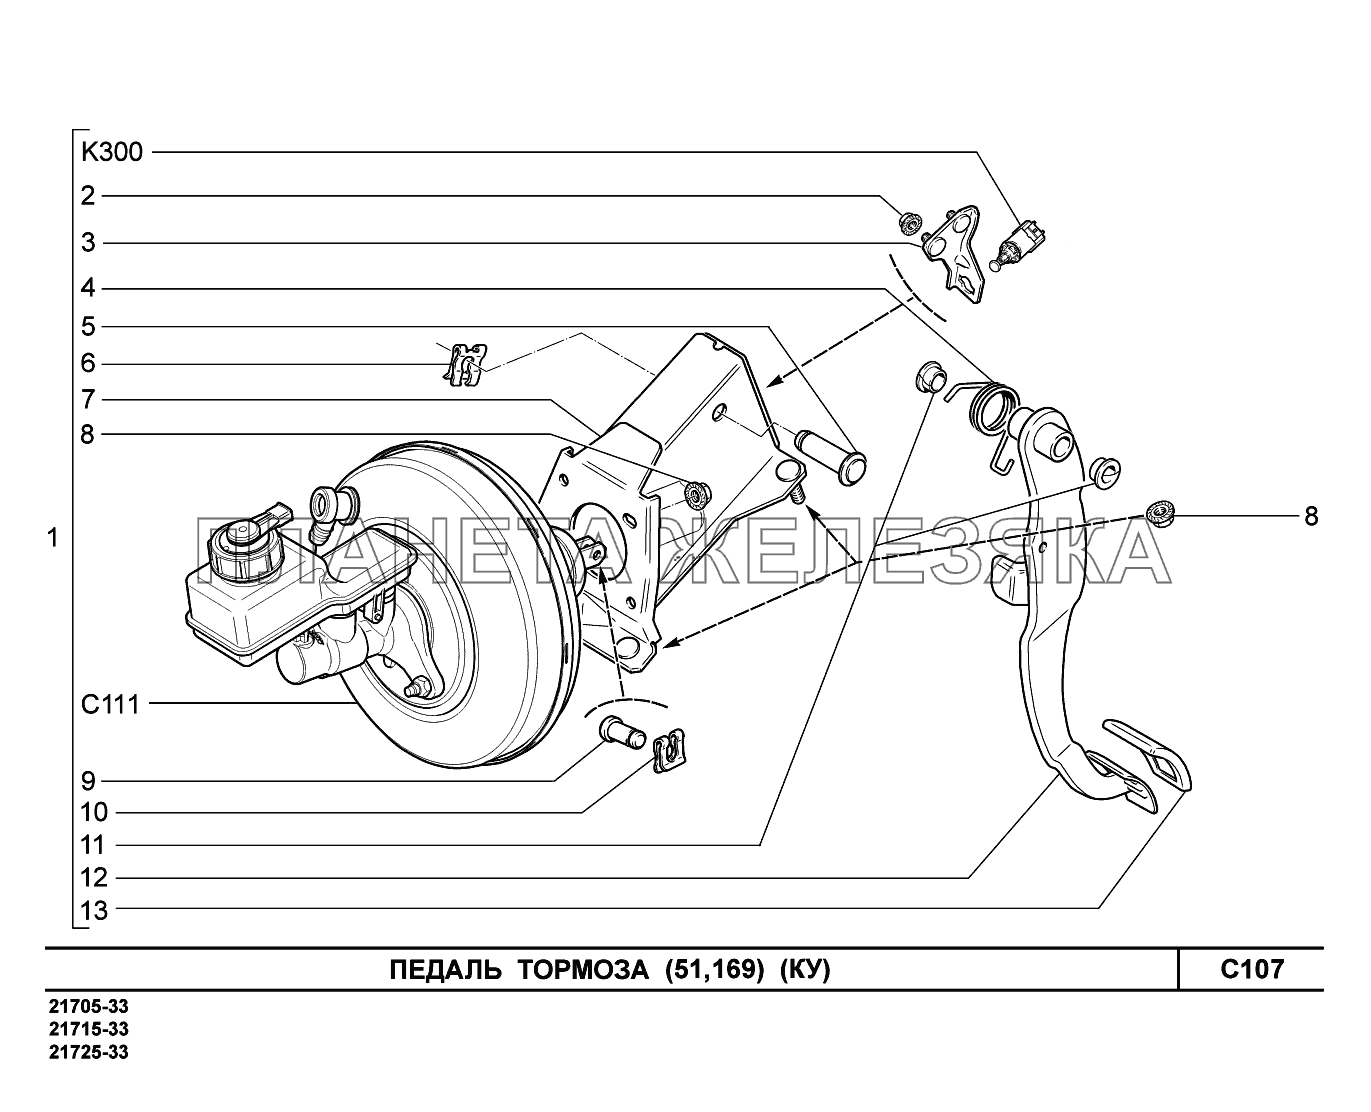 C107. Педаль тормоза ВАЗ-2170 